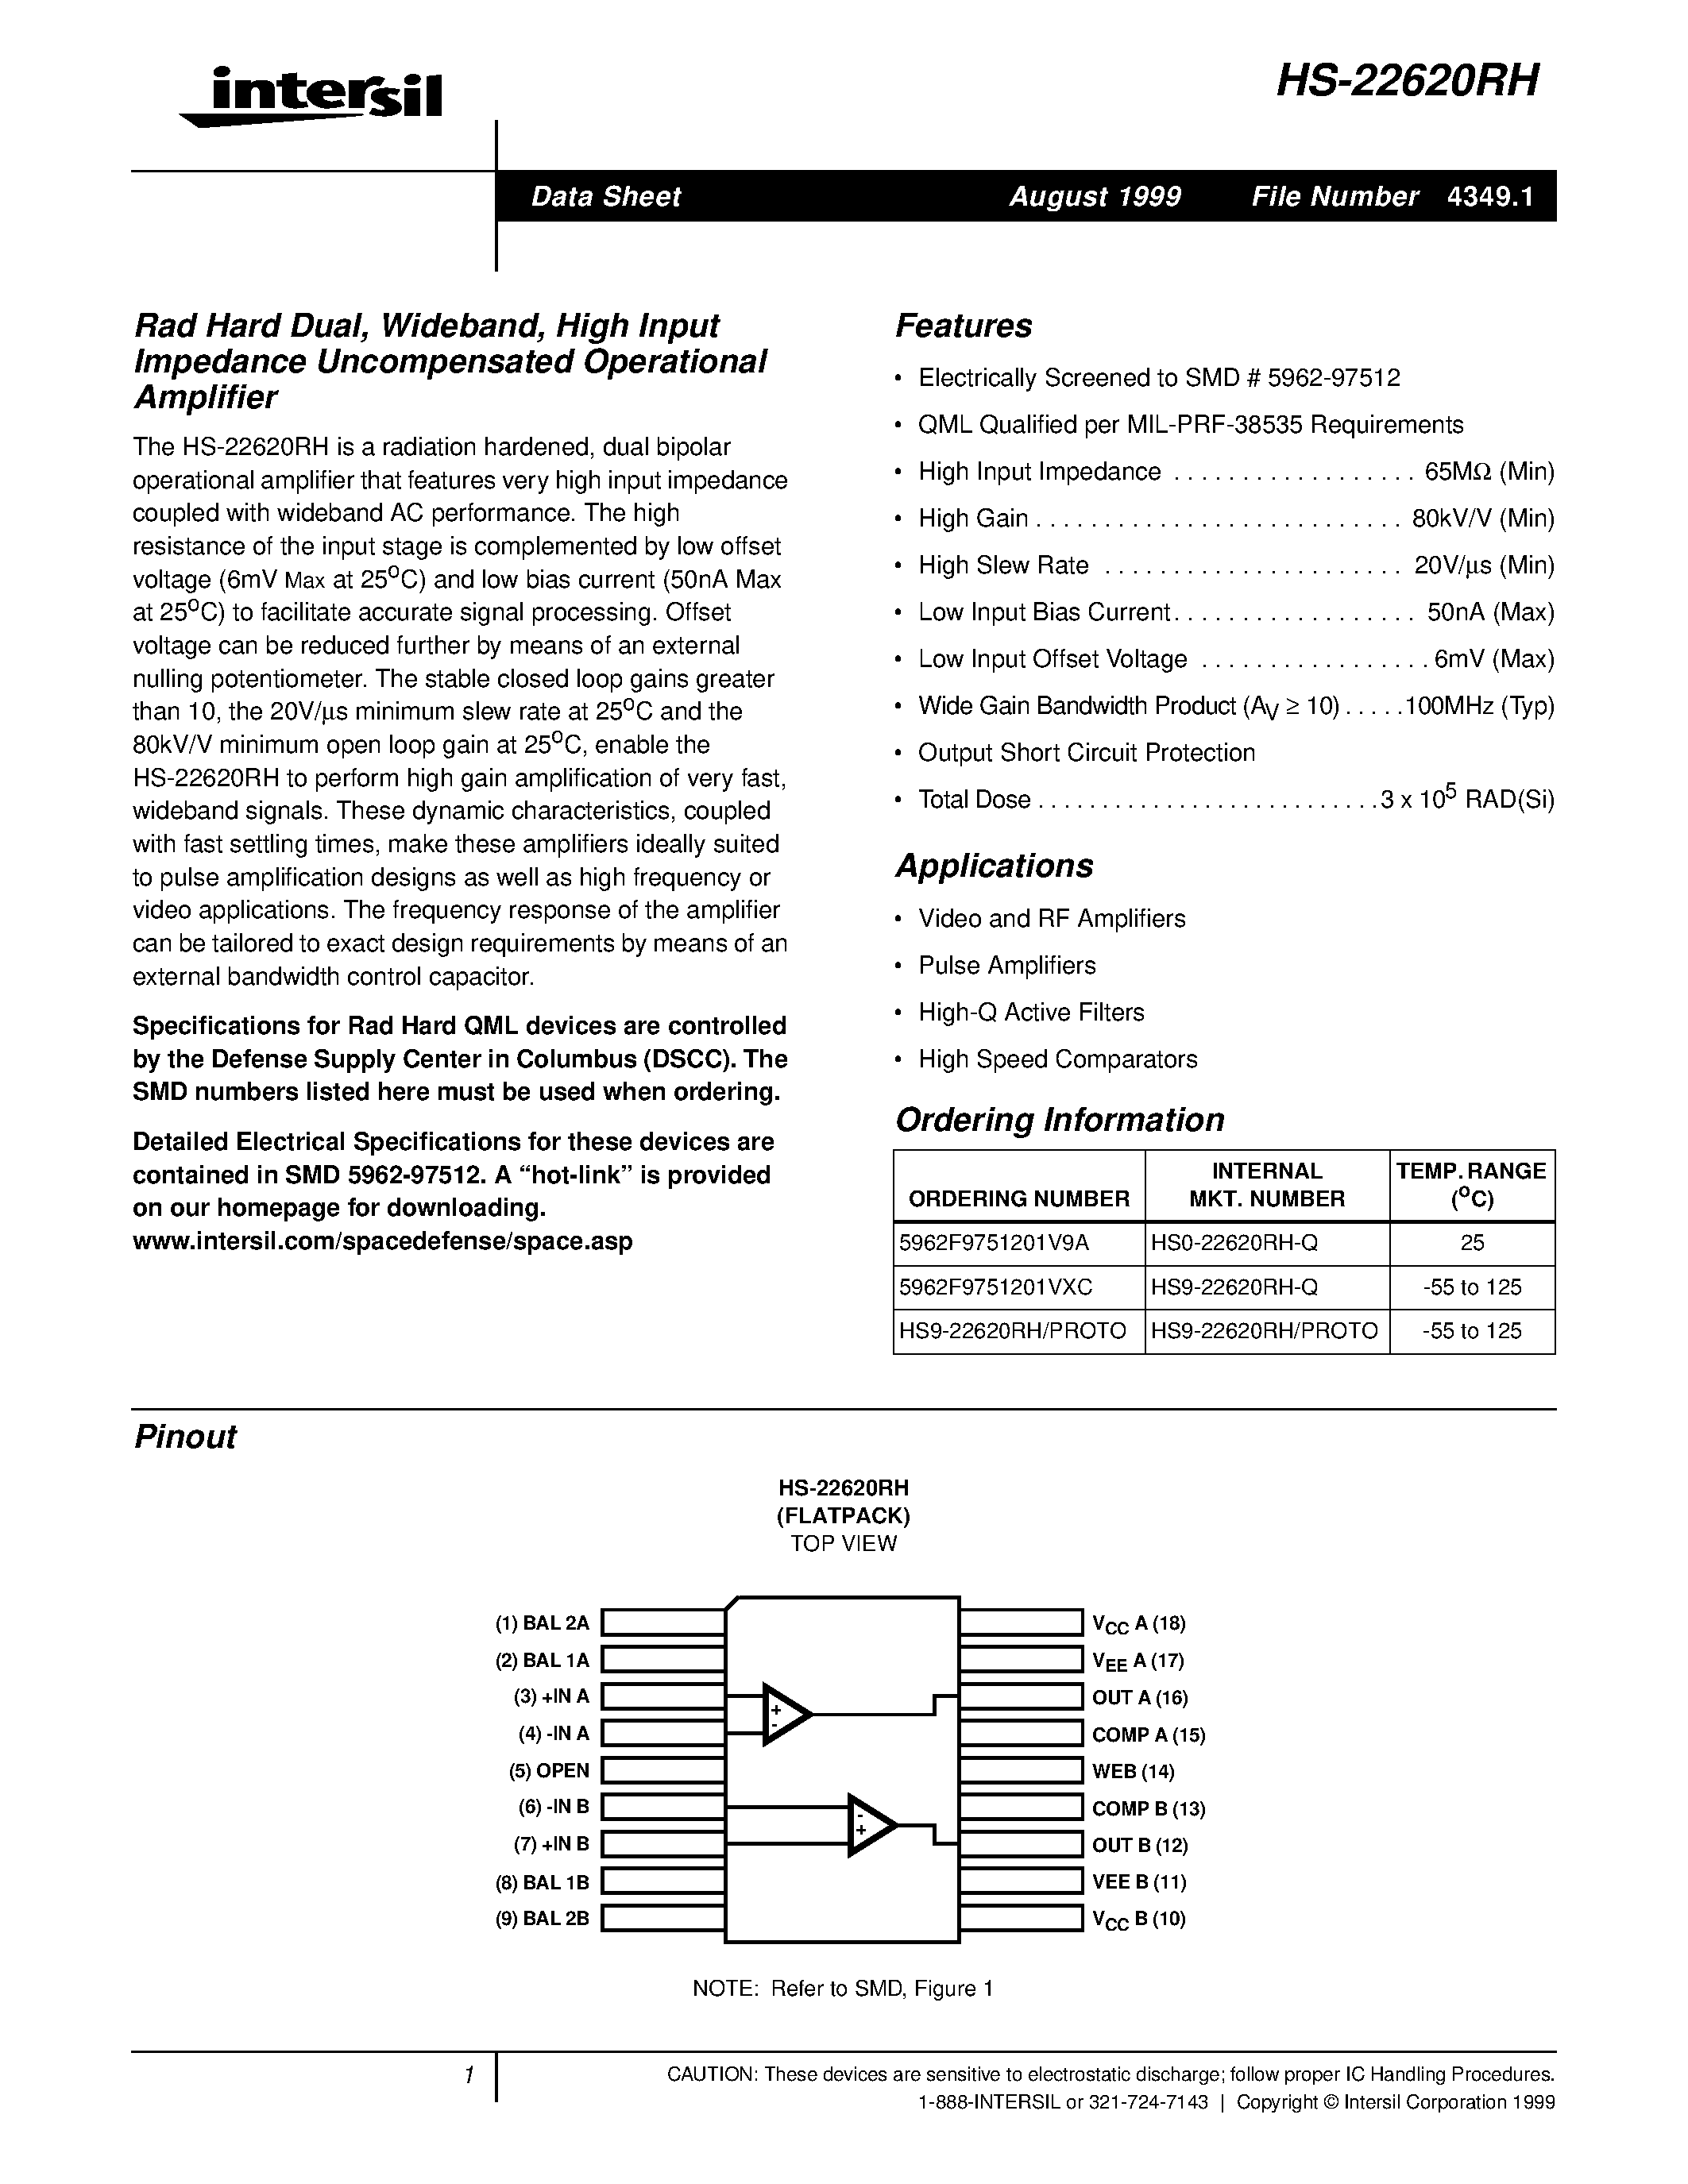 Даташит HS0-22620RH-Q - Rad Hard Dual/ Wideband/ High Input Impedance Uncompensated Operational Amplifier страница 1